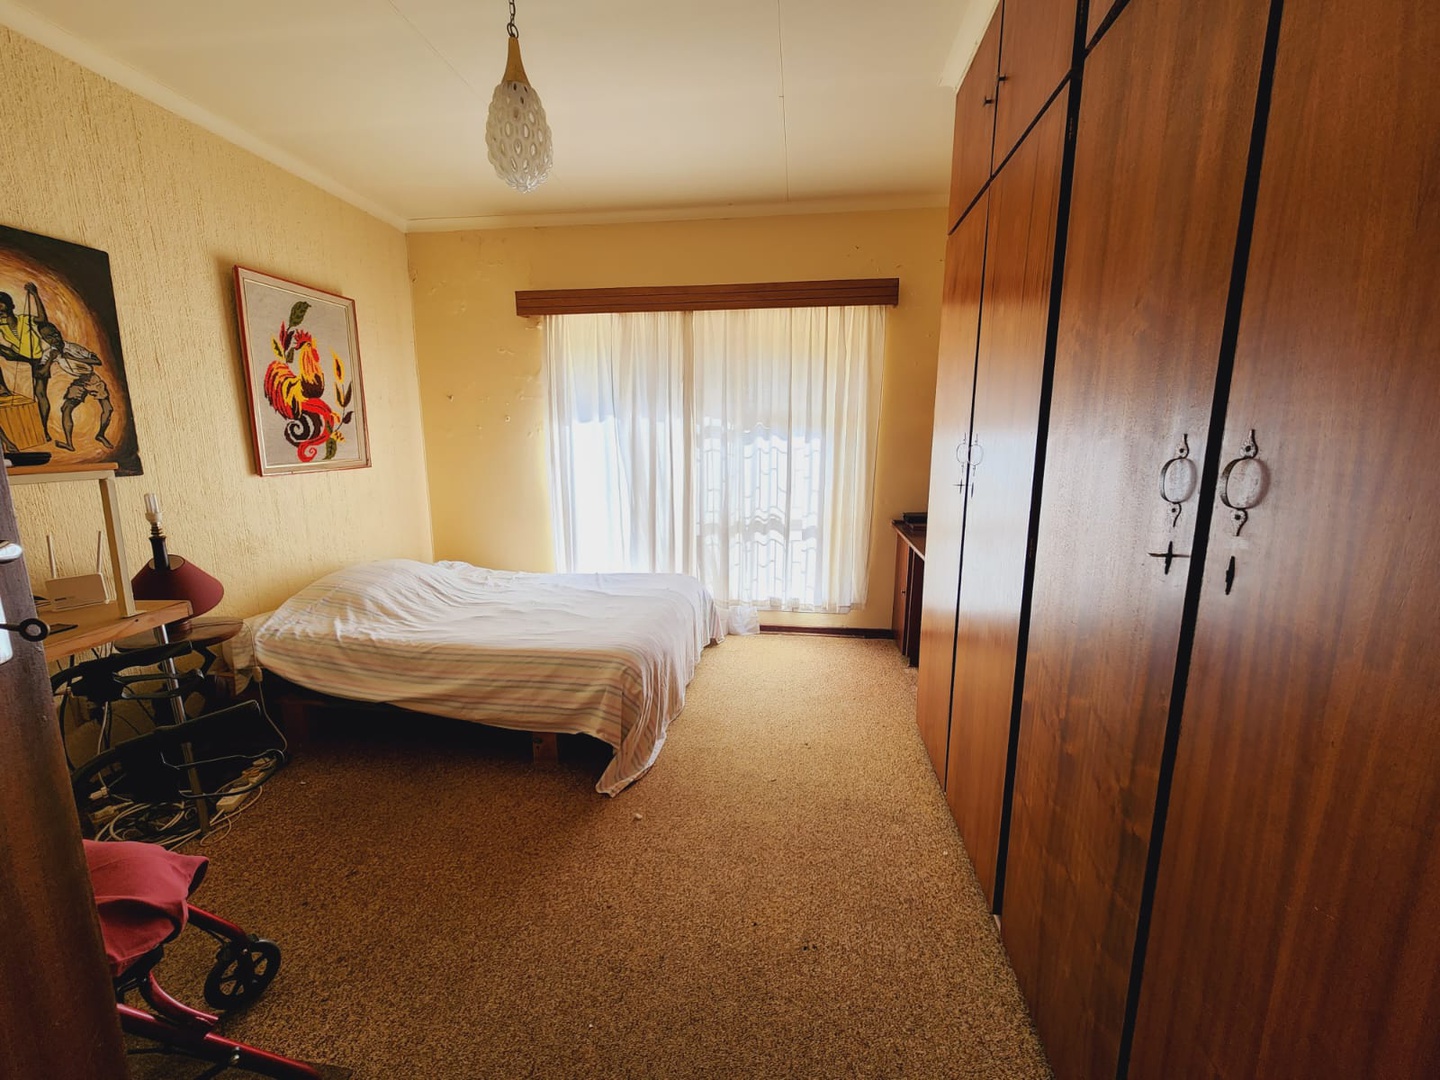 House in Potchefstroom Central - Bedroom 1